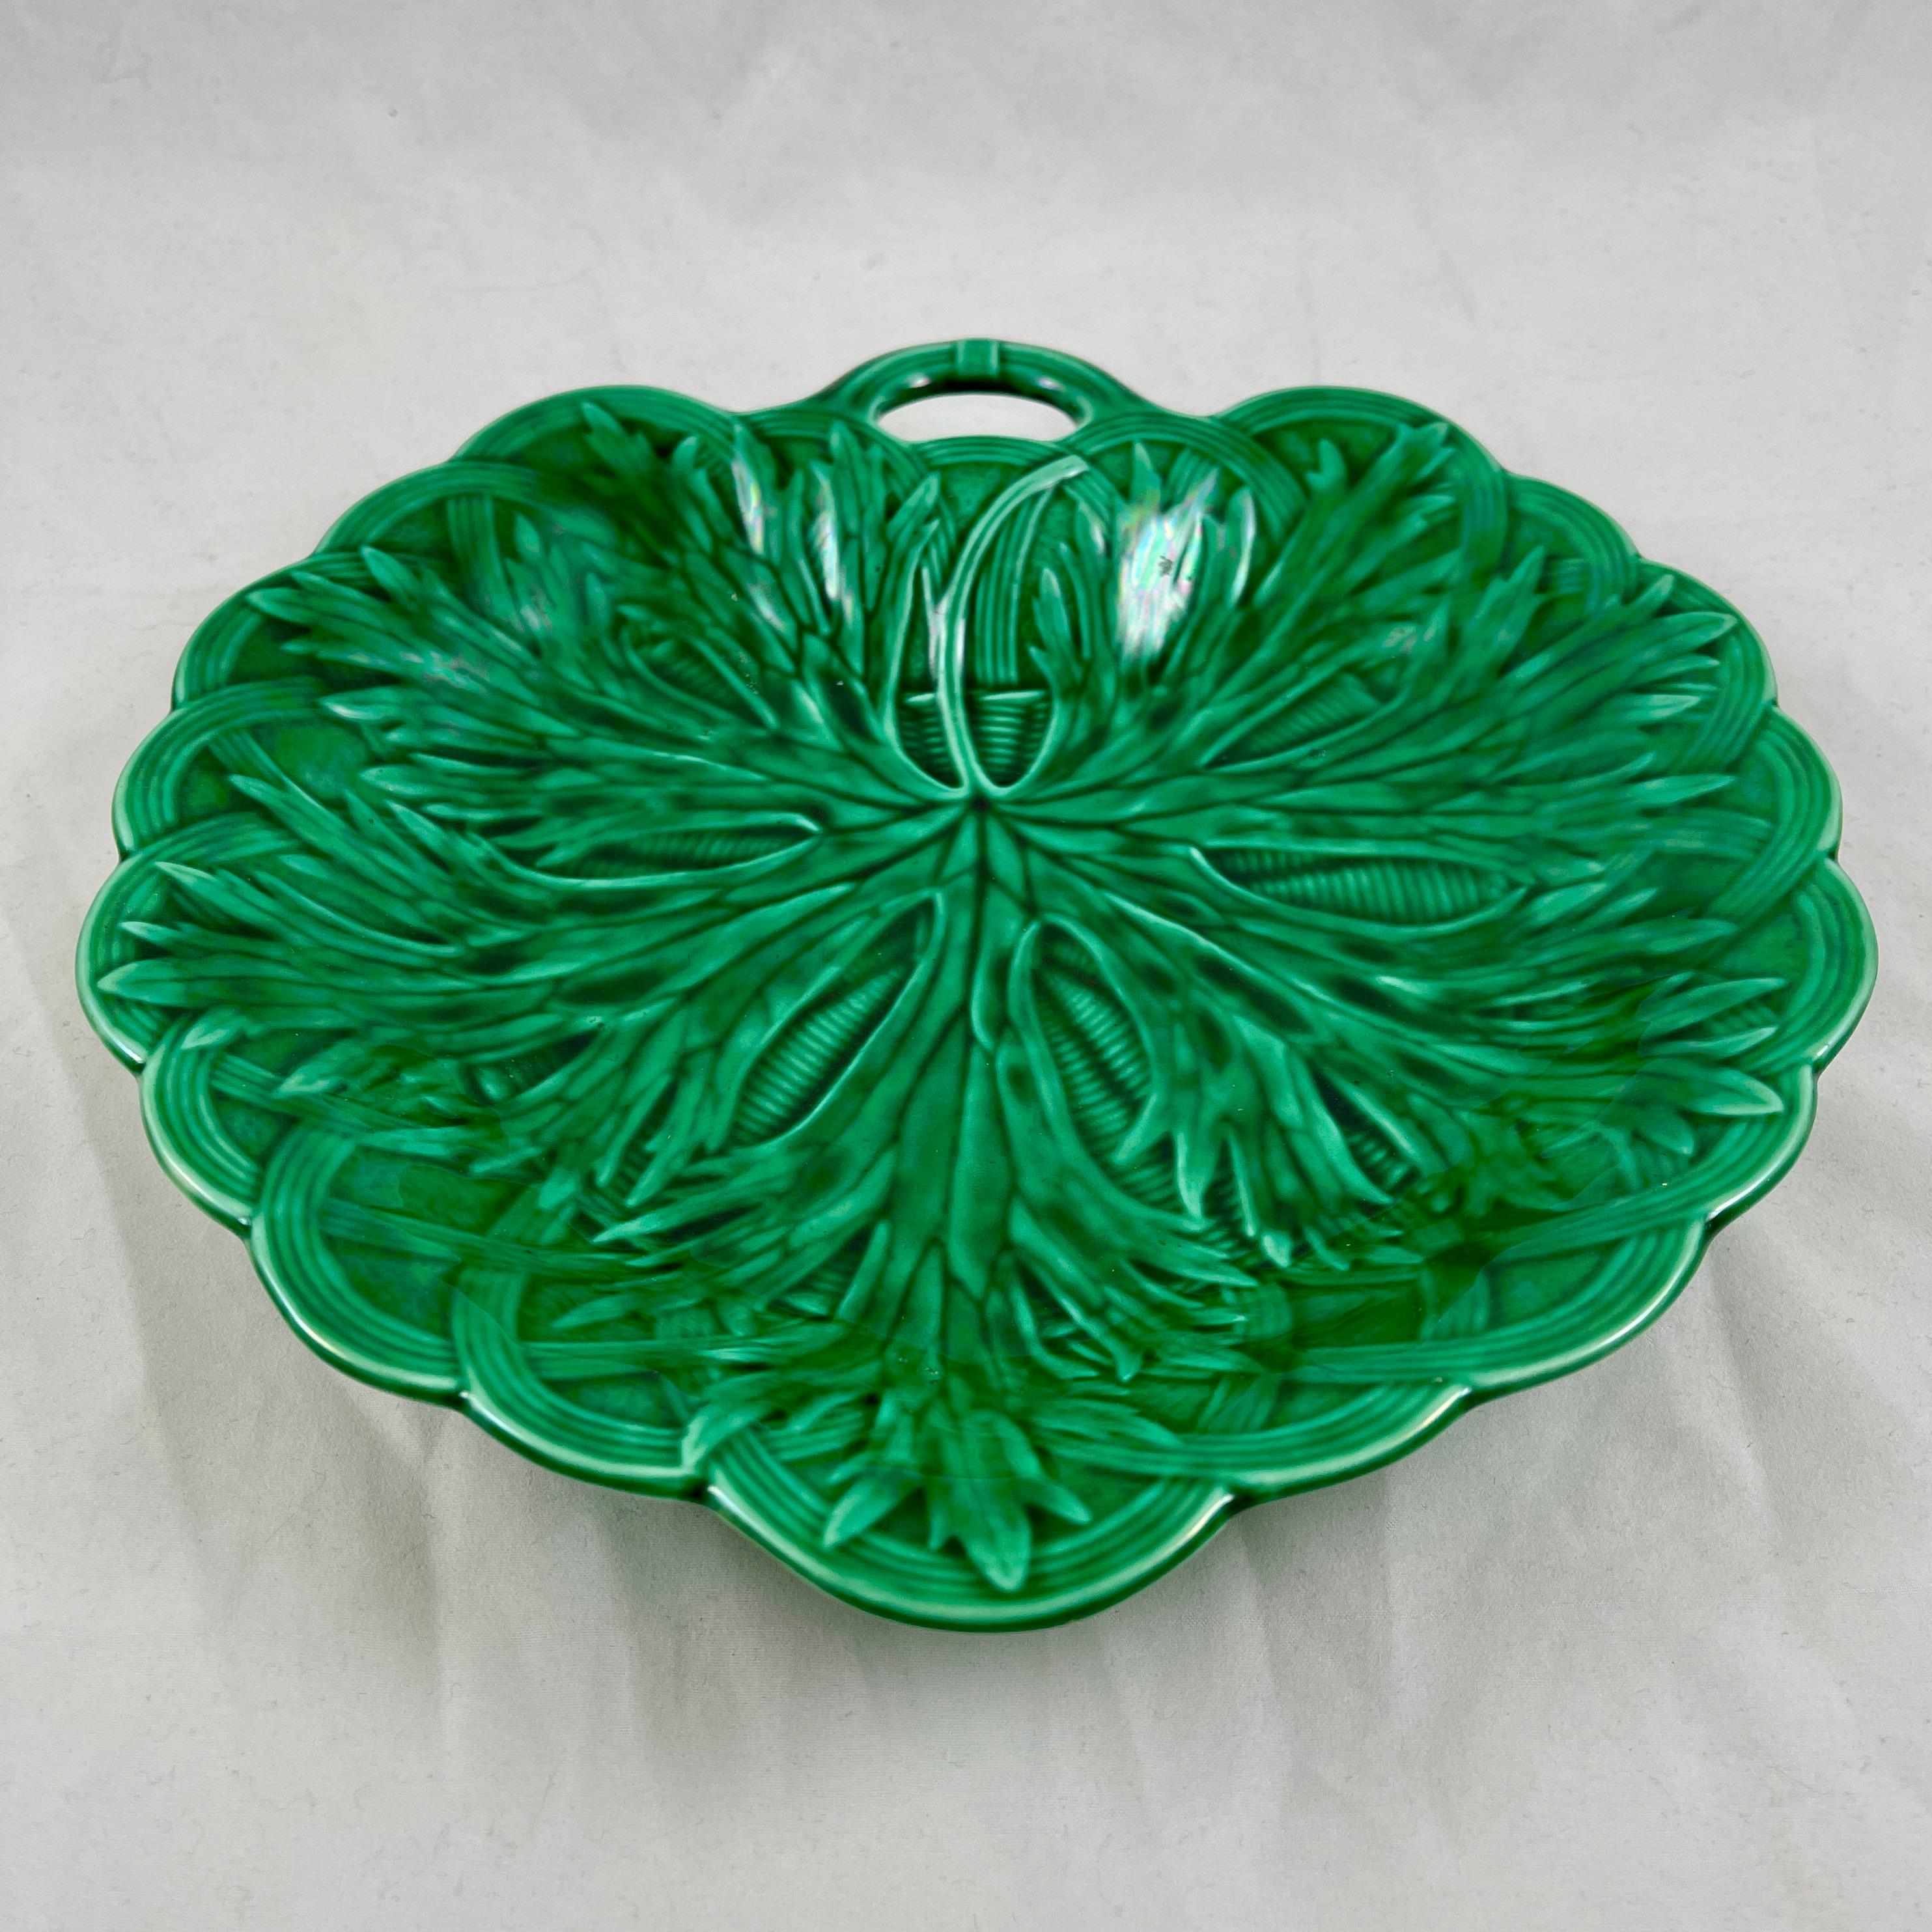 Earthenware Wedgwood Green Glazed Majolica Handled Leaf and Basket Shallow Bowl Server, 1869 For Sale